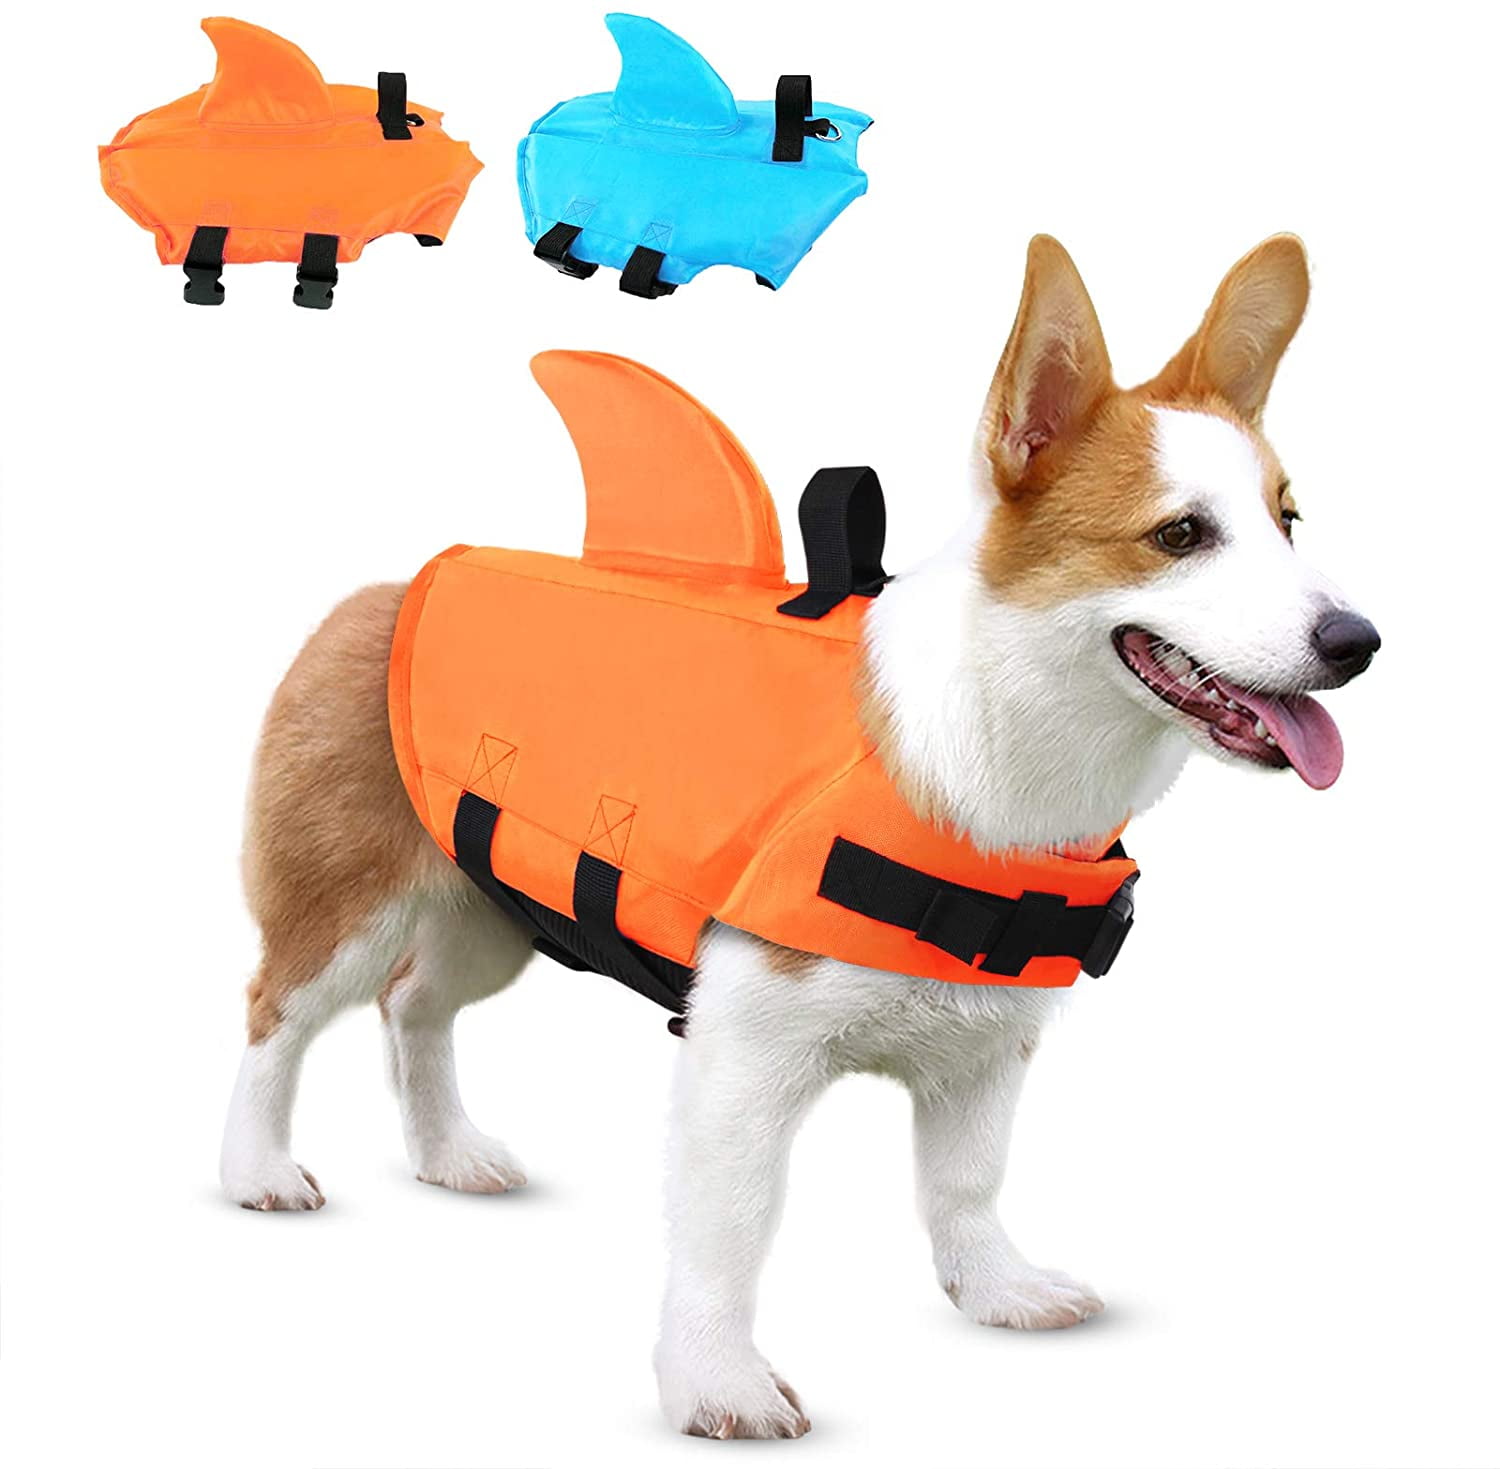 QBLEEV Reflective Stripes Dog Life Vest,Pet Floatation Jacket Float Coat by Quick Release Lifesaver Preserver Swimming Suit Adjustable Belt for Water Safety at Beach Pool Boat Shark